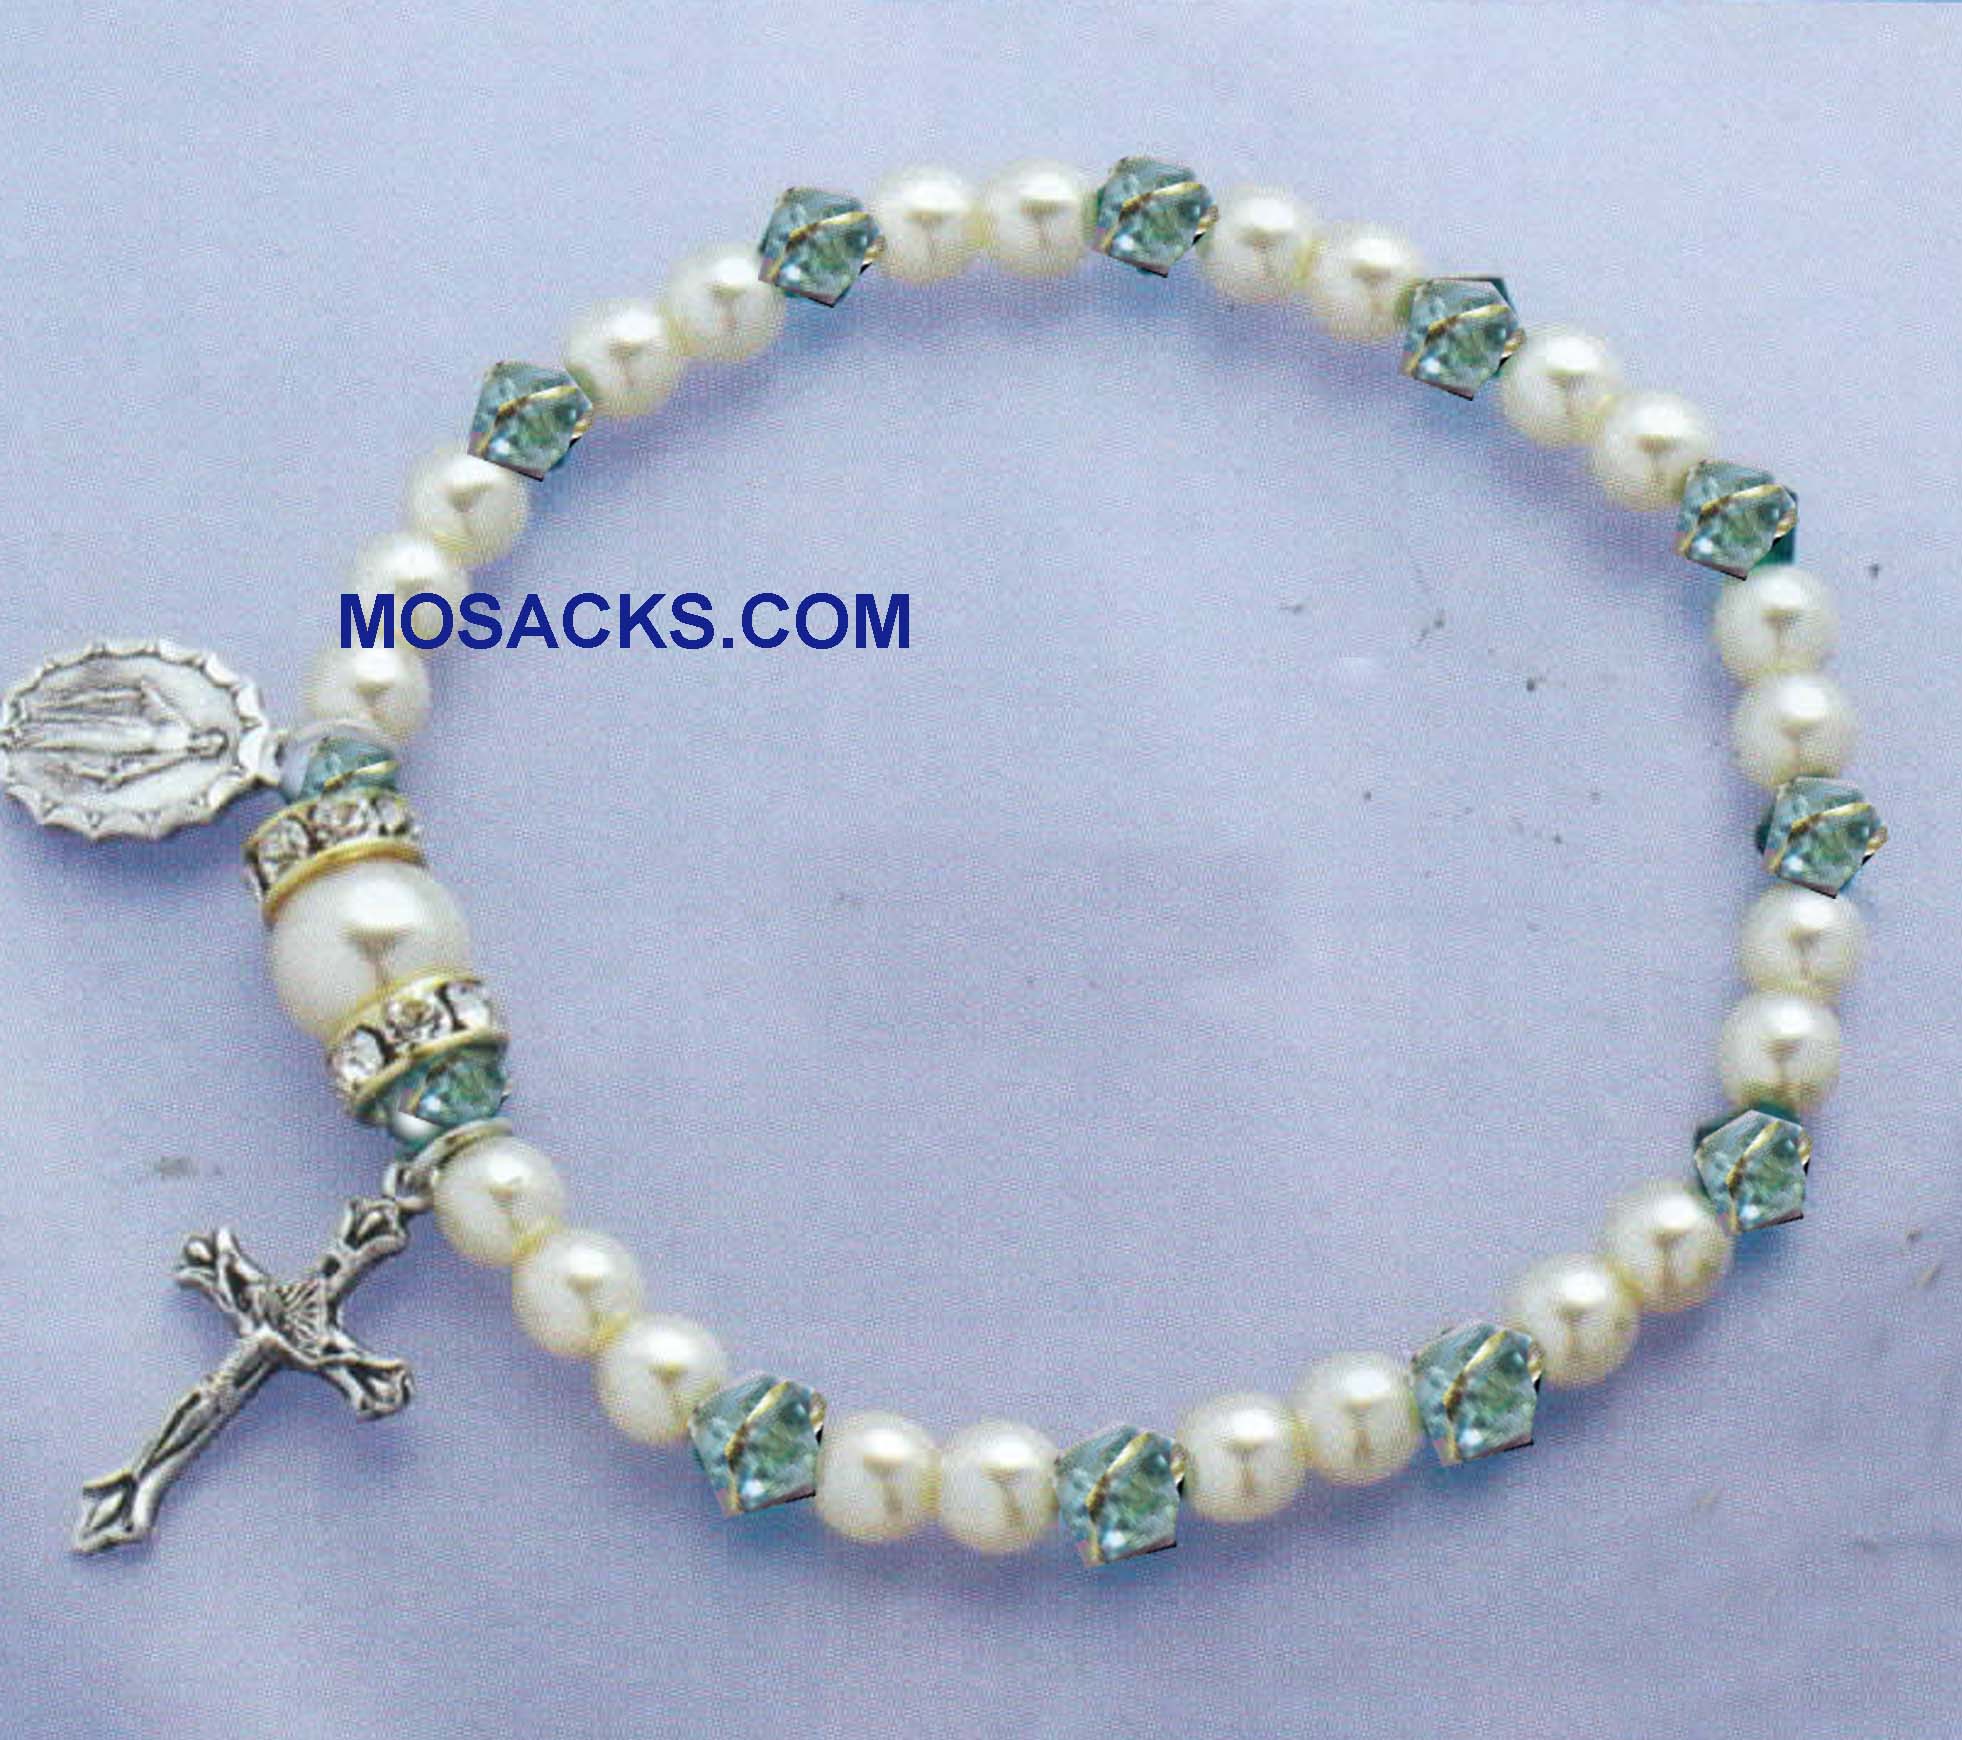 March Birthstone Rosary Stretch Bracelet Aqua -45280AQ Aqua One Decade Rosary Bracelet for March